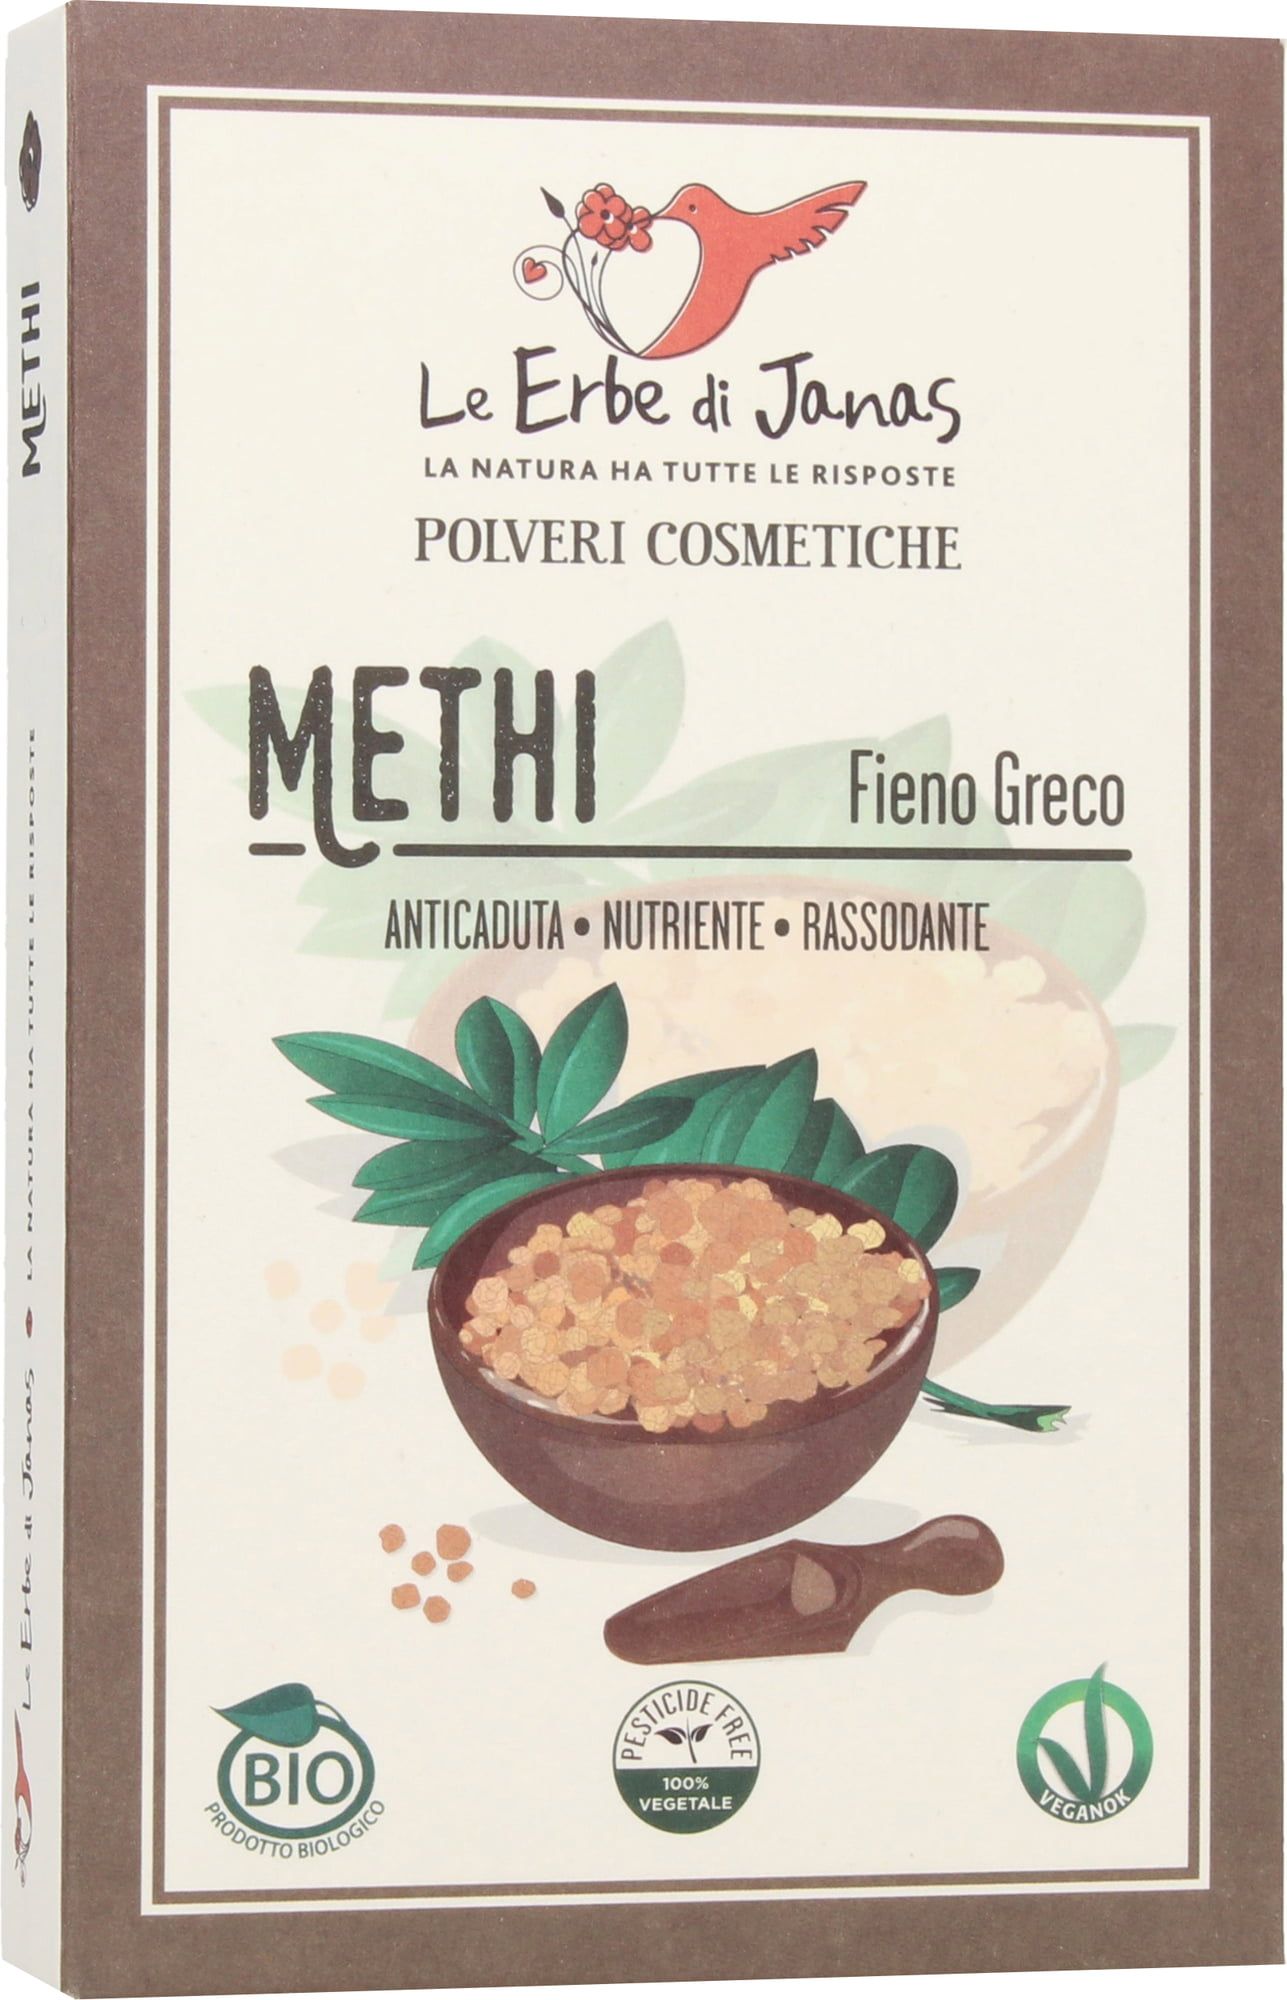 Le Erbe di Janas Methi - Fenogreco - 100 g